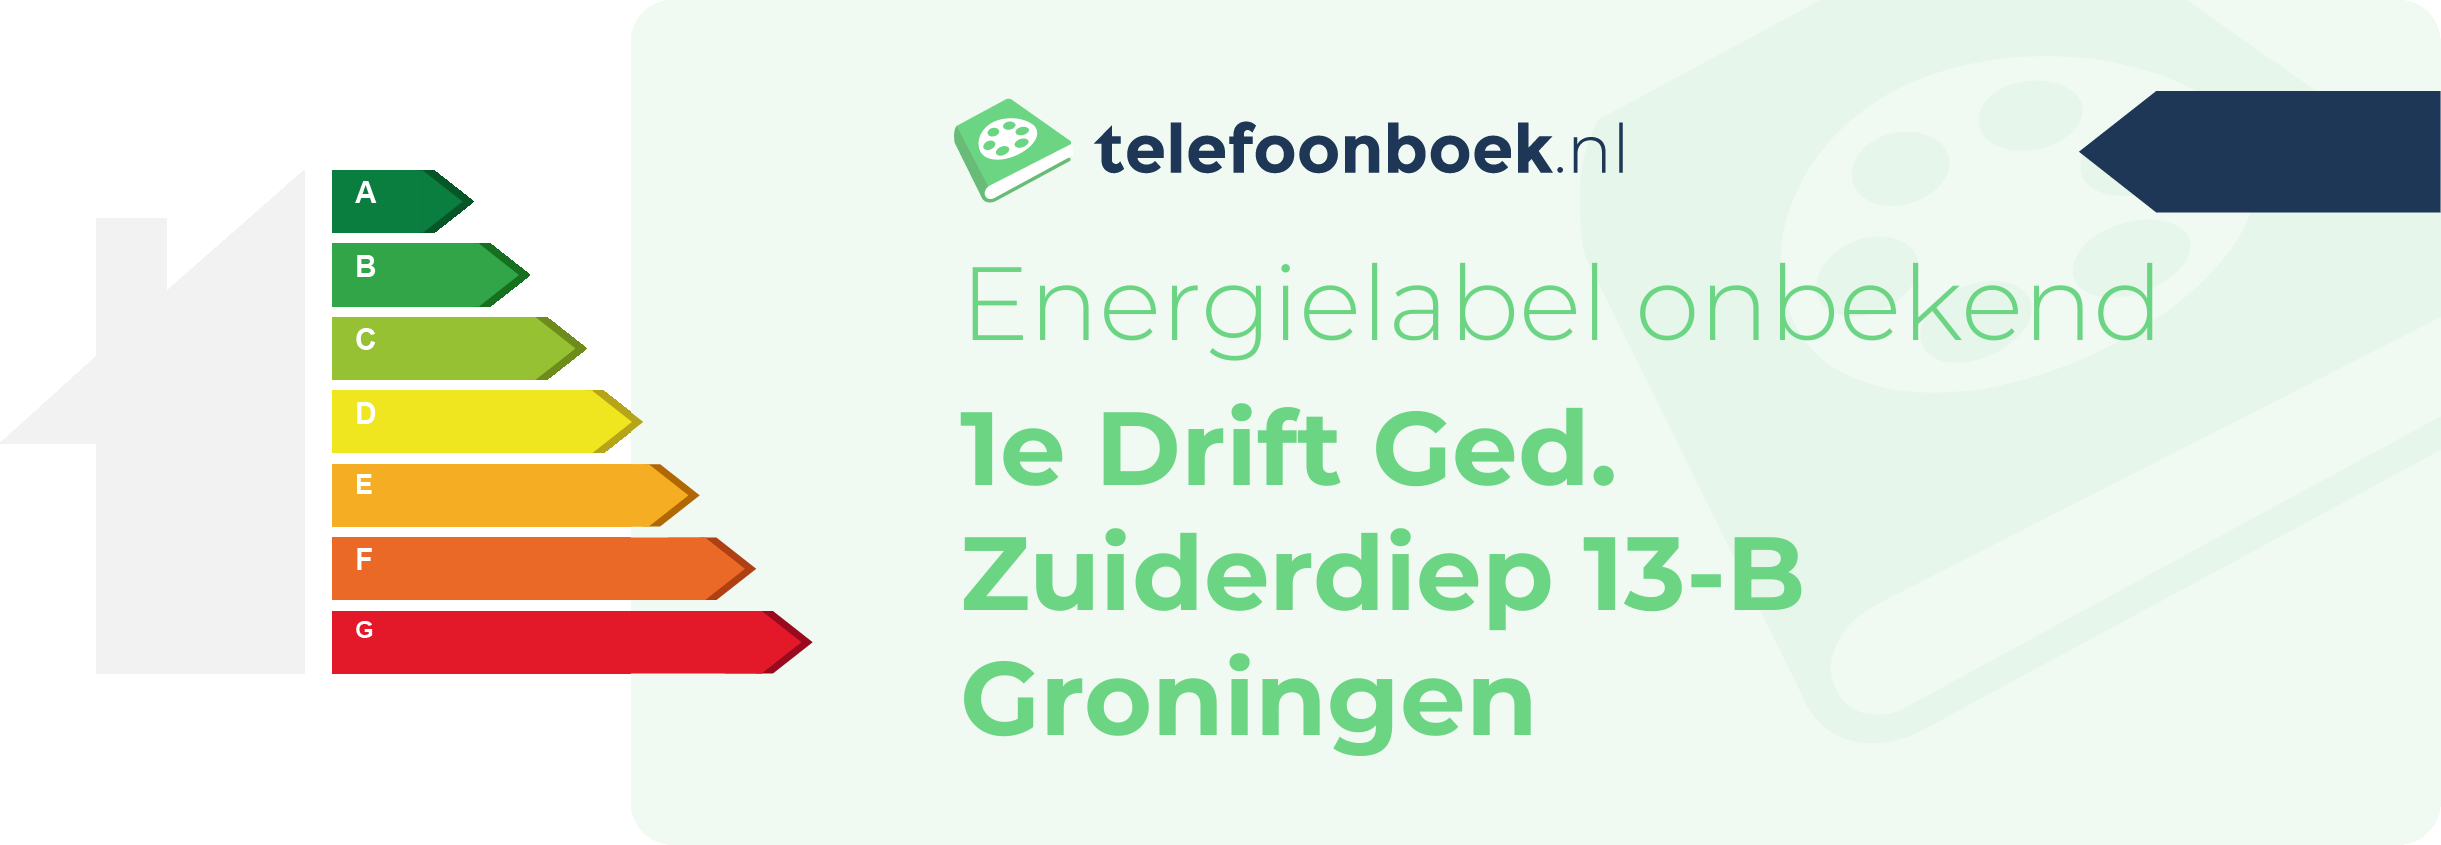 Energielabel 1e Drift Ged. Zuiderdiep 13-B Groningen